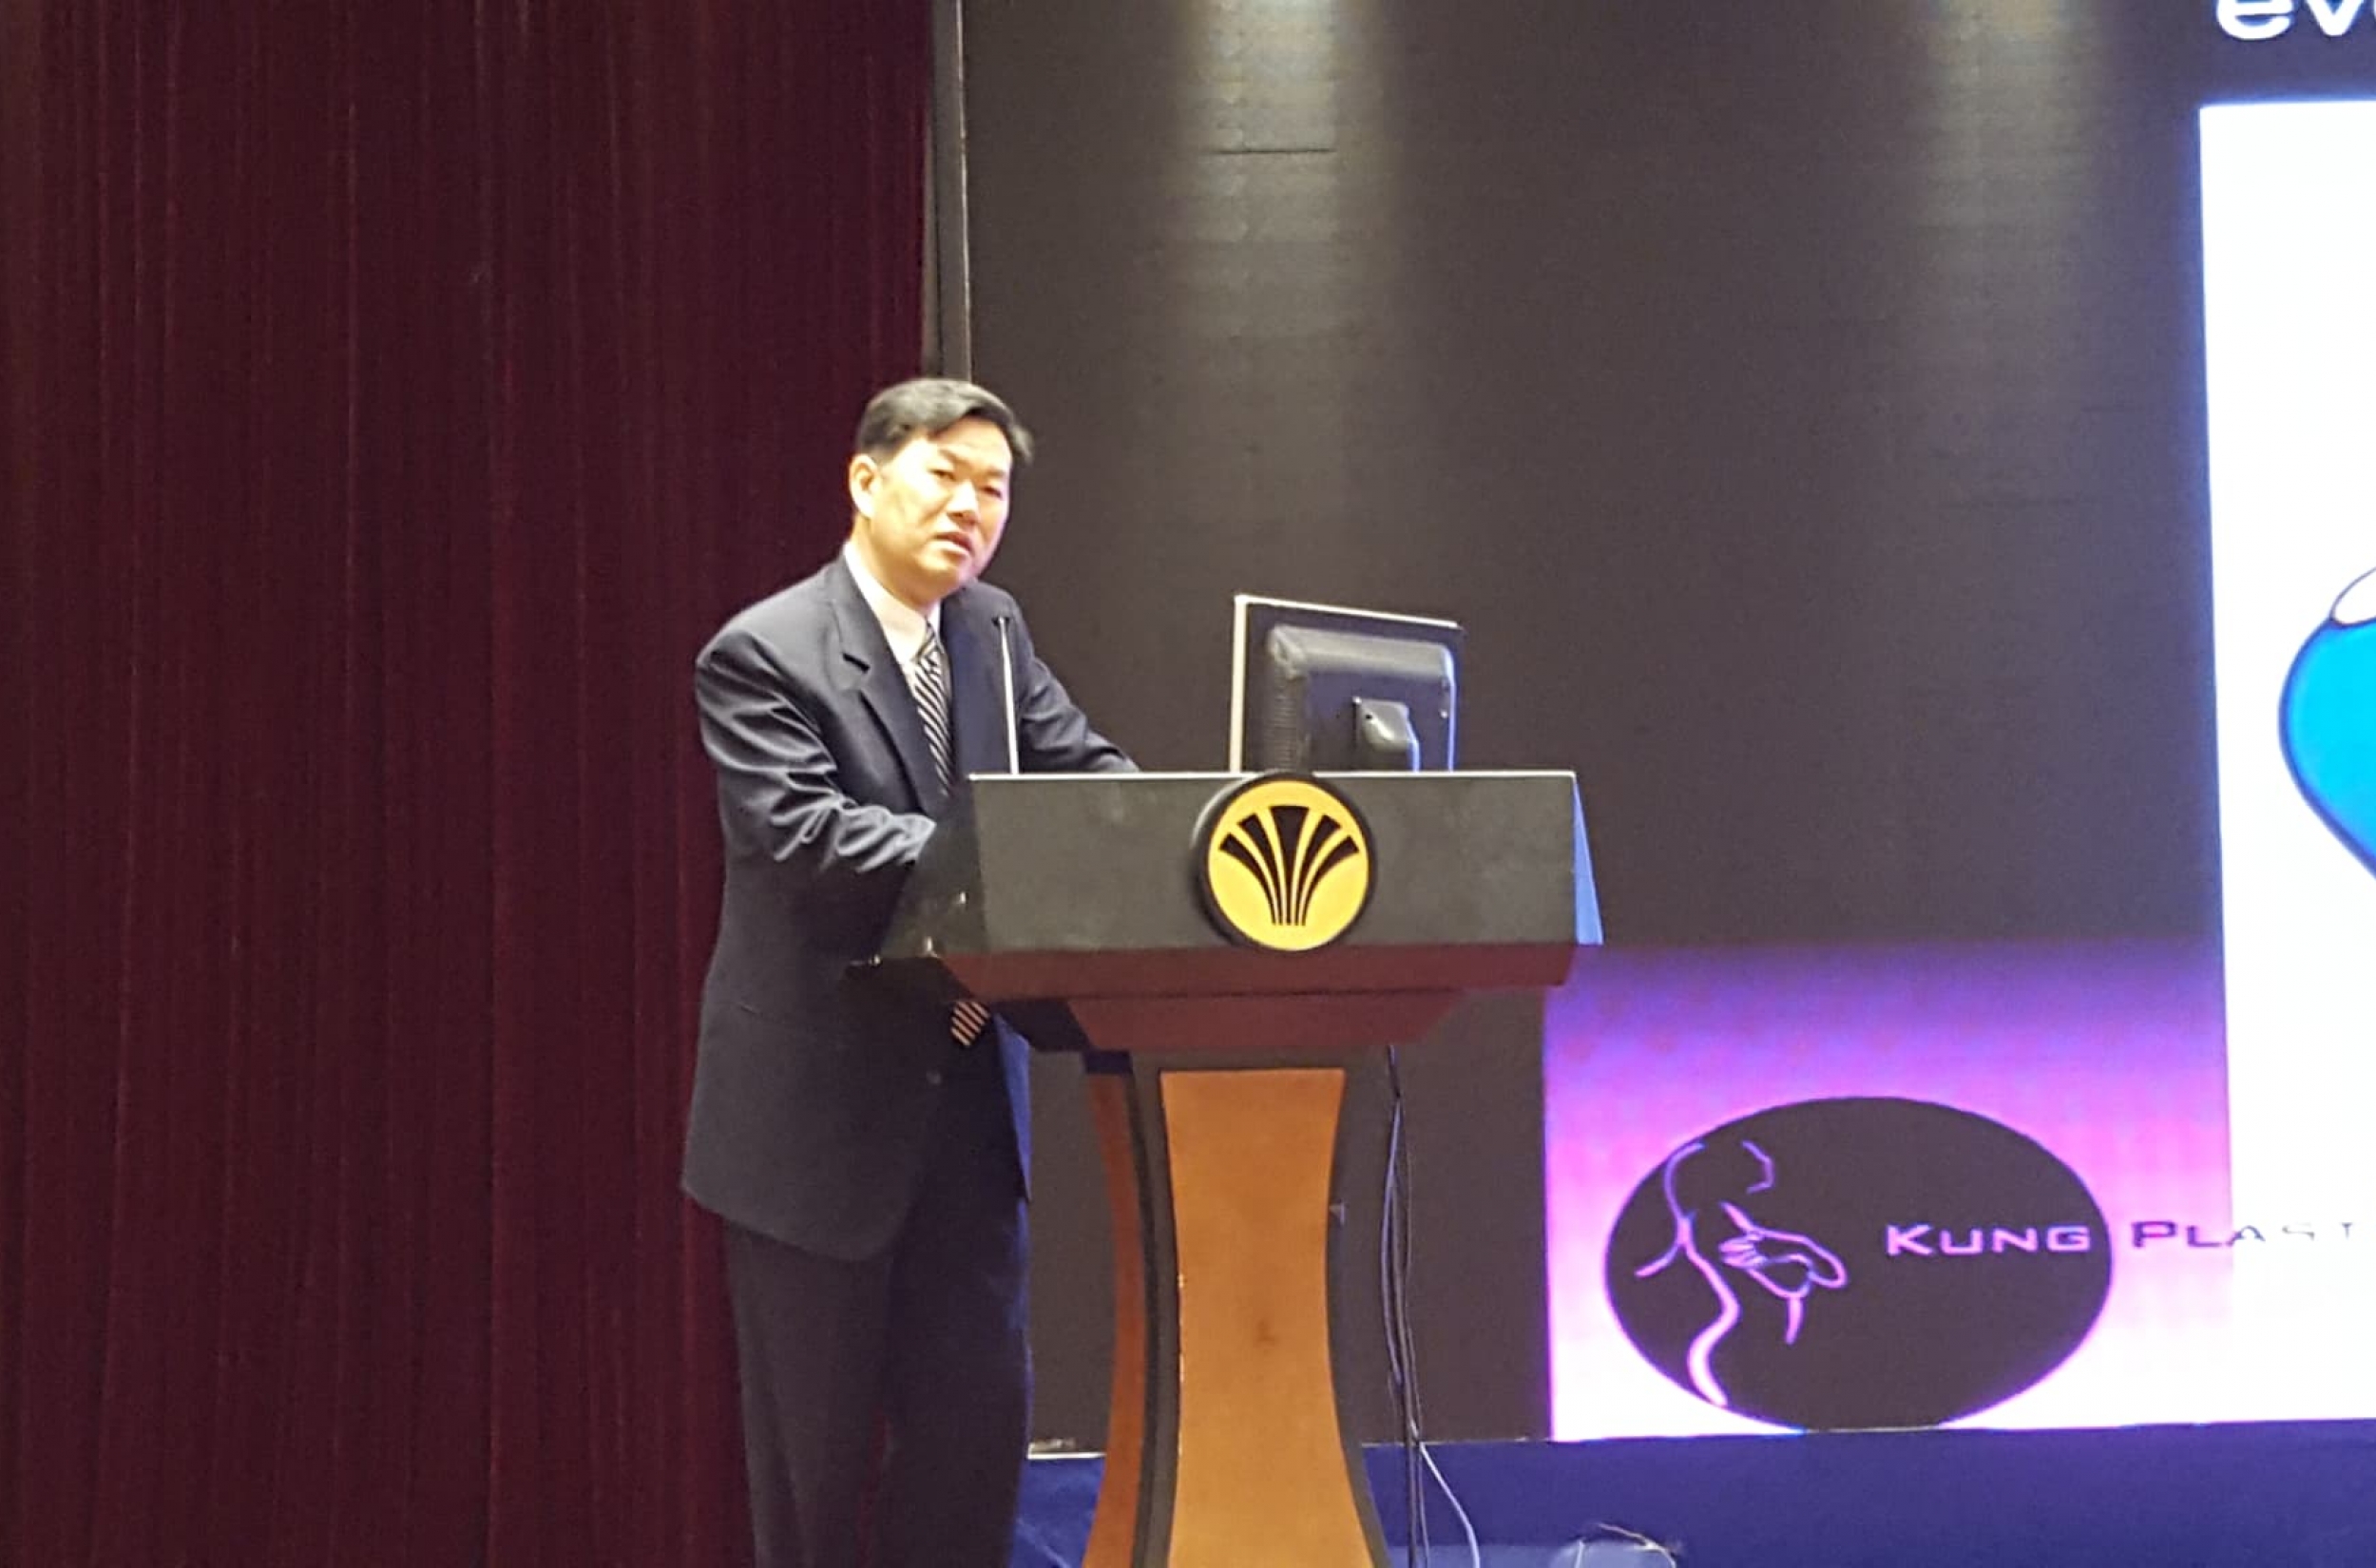 Dr Kung speaking at a podium